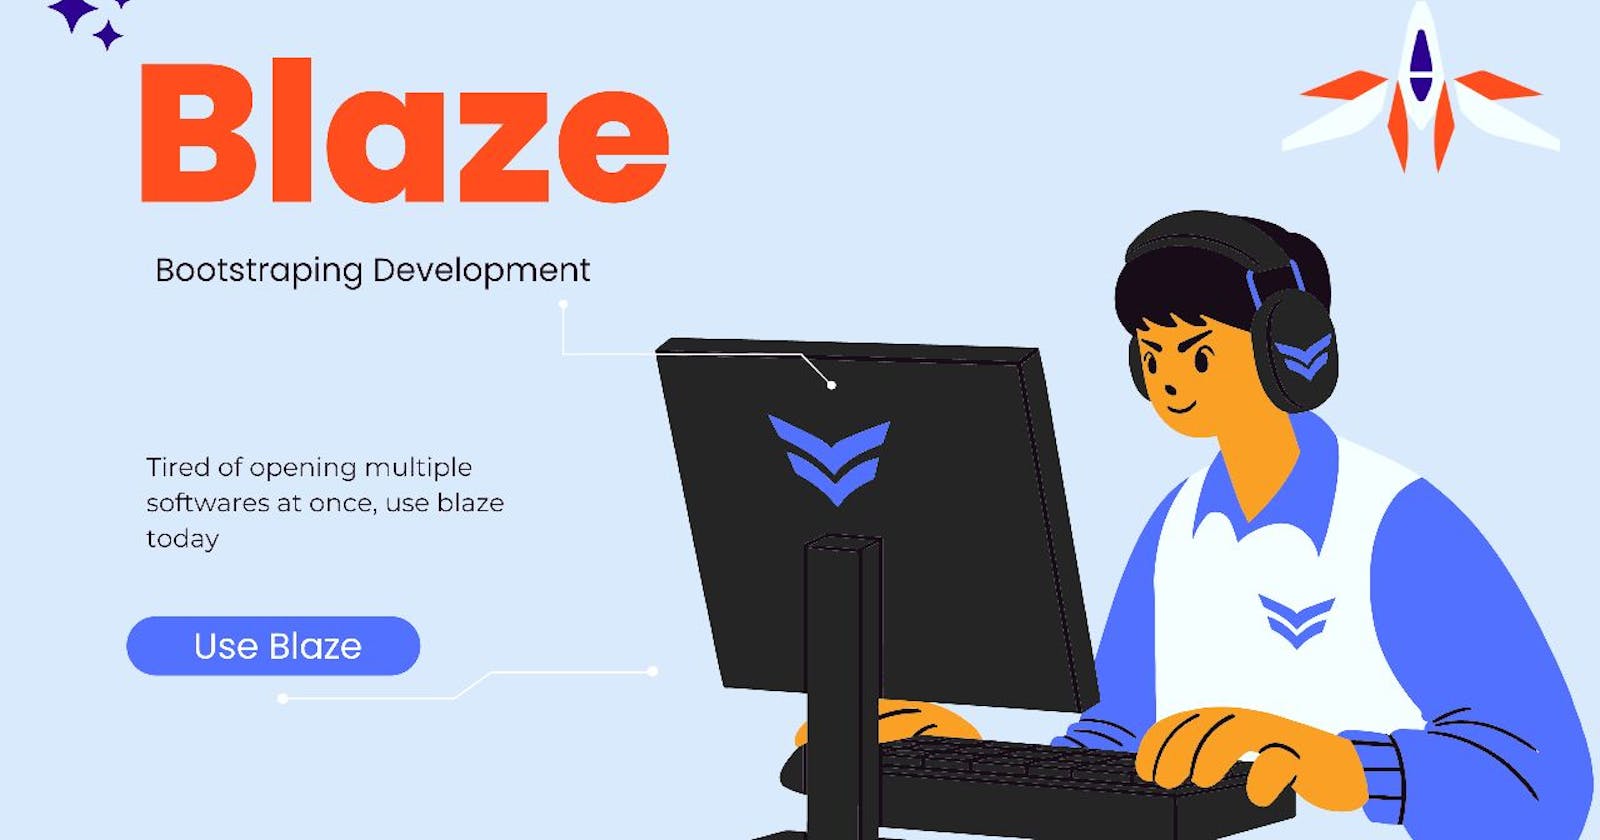 Blaze, a software that opens multiple softwares!